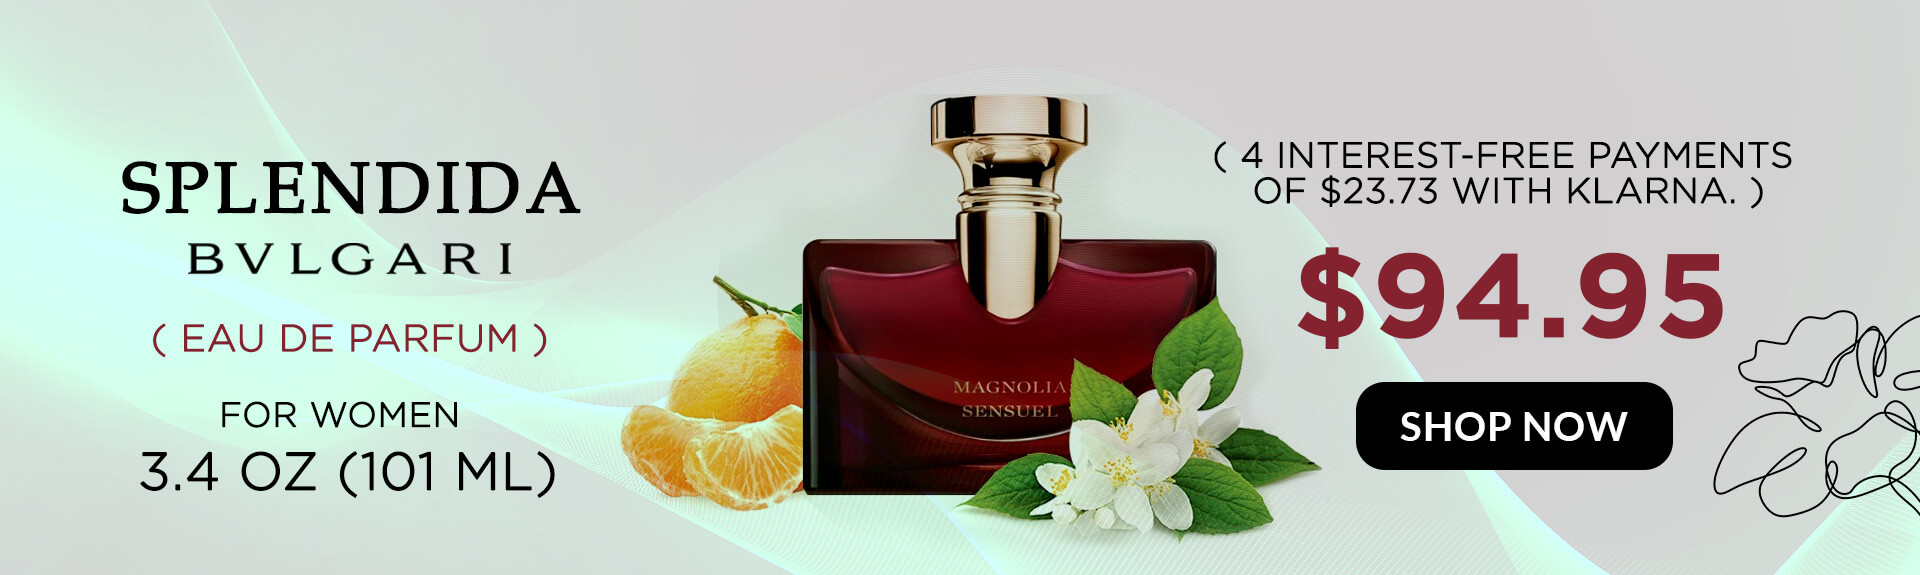 Splendida Magnolia Sensuel by Bvlgari for Women